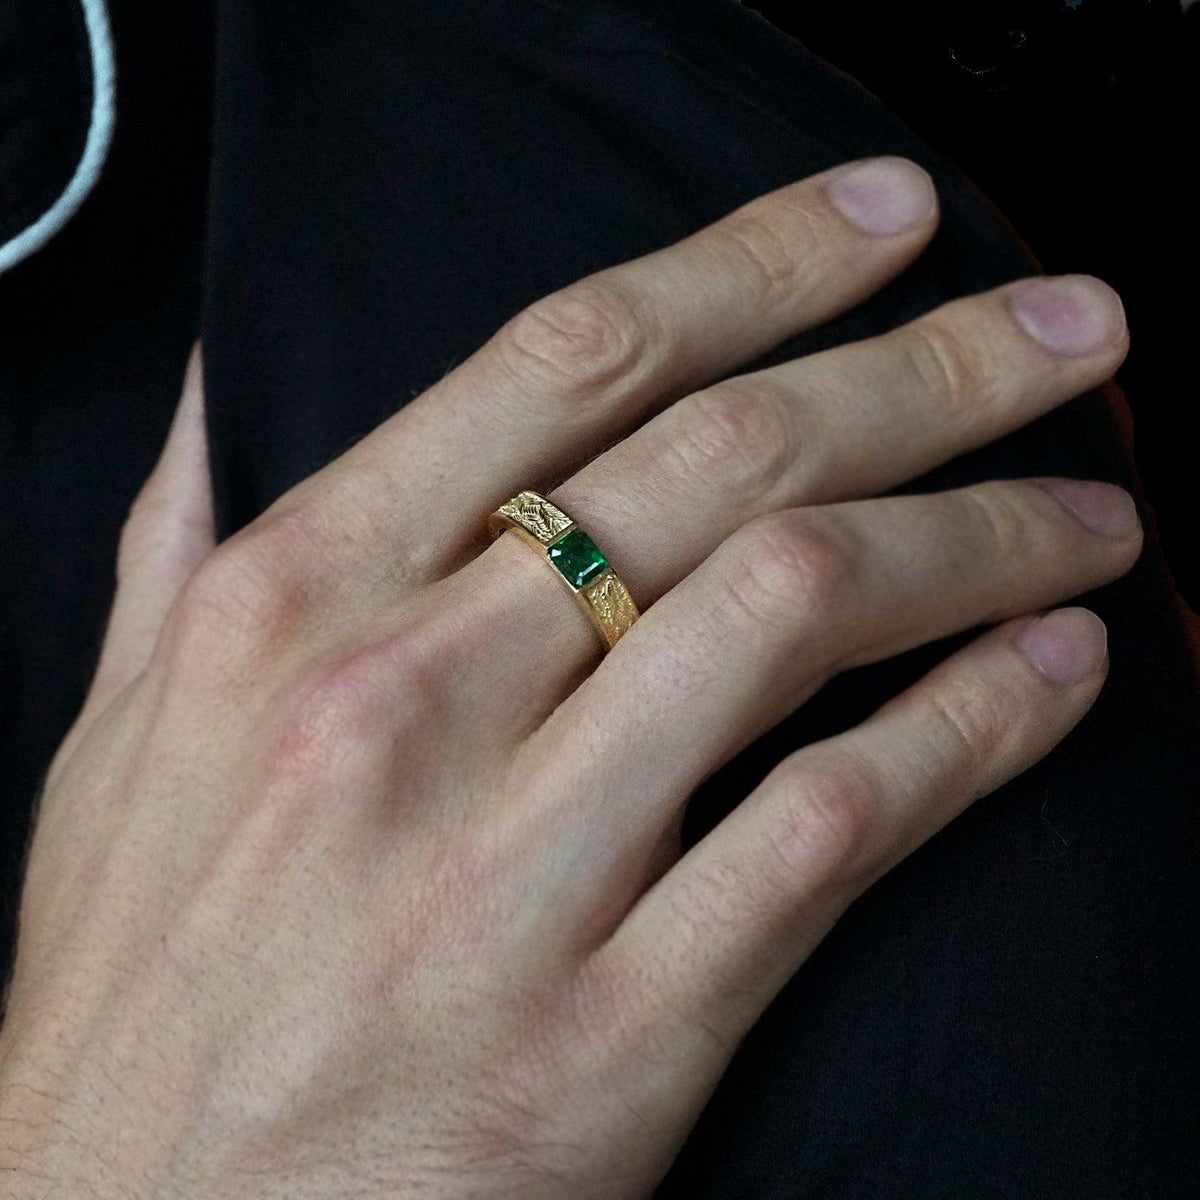 Emerald Dragon Ring in 14K Gold, 5mm - Tippy Taste Jewelry